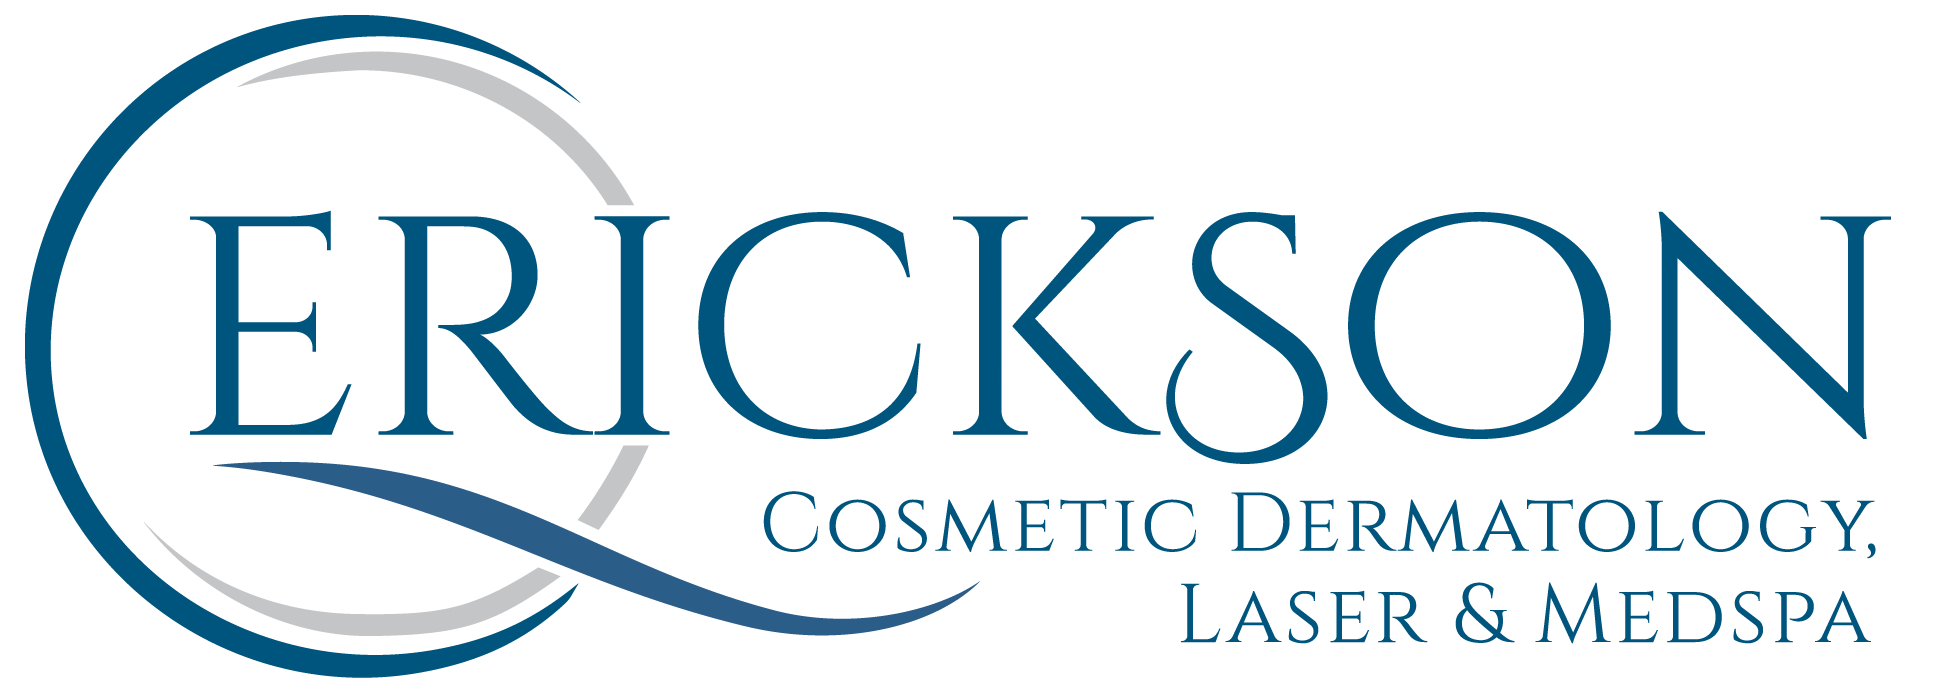 Erickson Cosmetic Dermatology, Laser & MedSpa